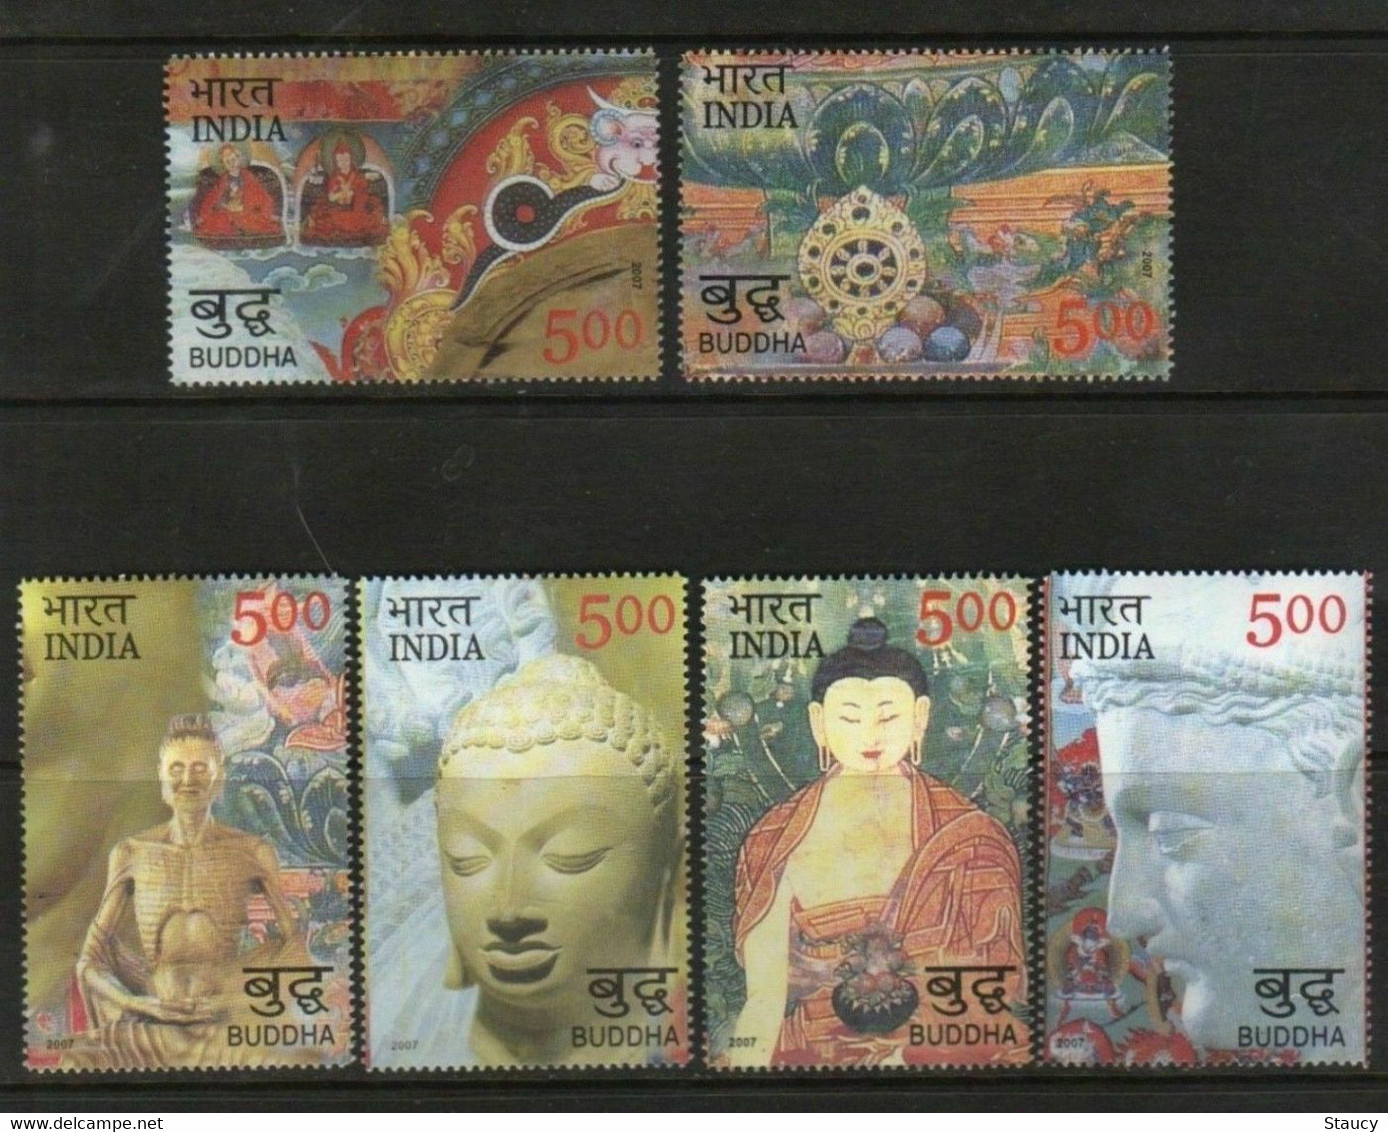 INDIA 2007 2550 YEARS OF MAHAPARINIRVANA OF THE BUDDHA 6v SET MNH, P.O Fresh & Fine - Gravures